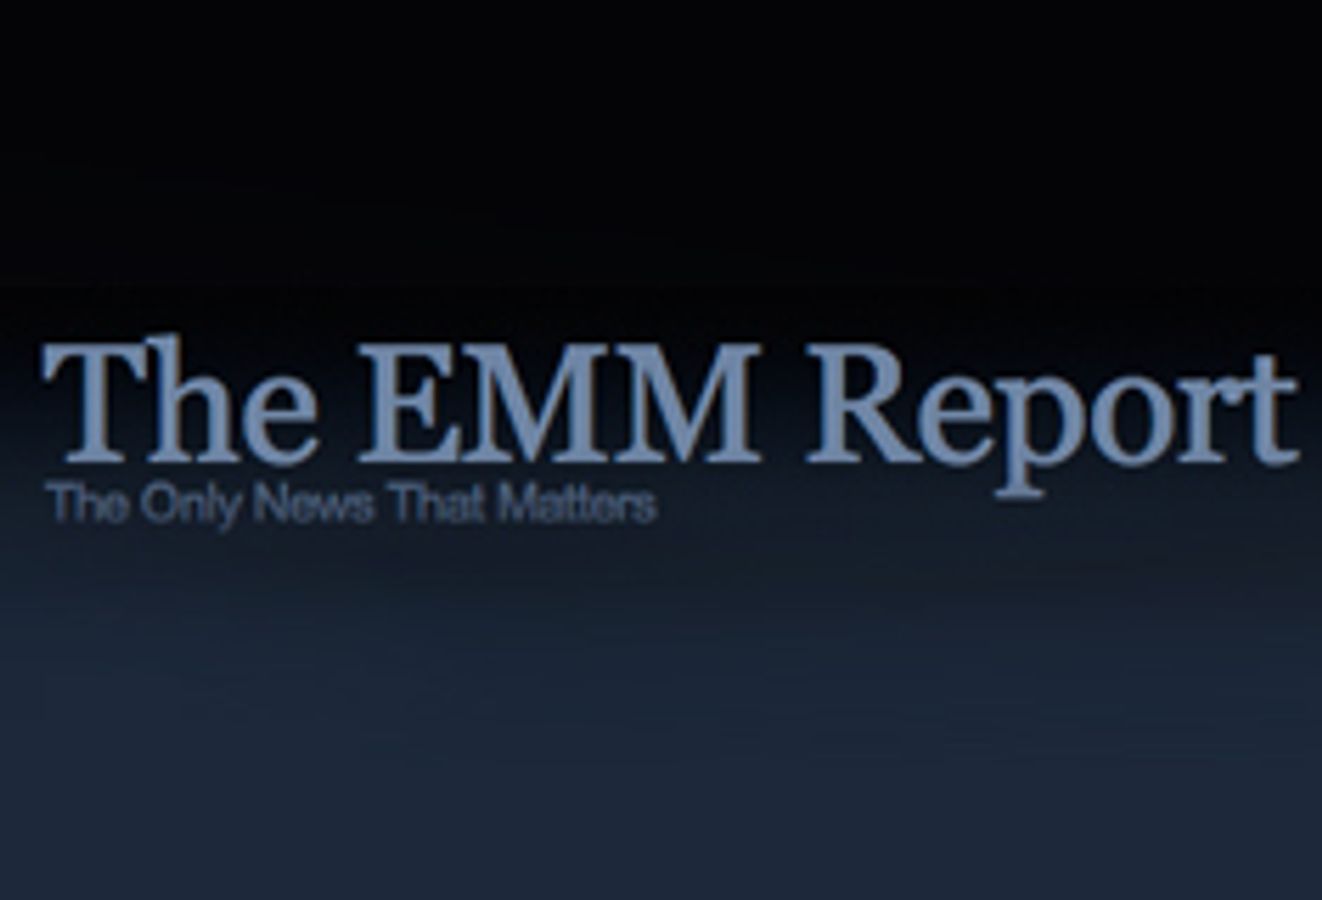 EMM Report